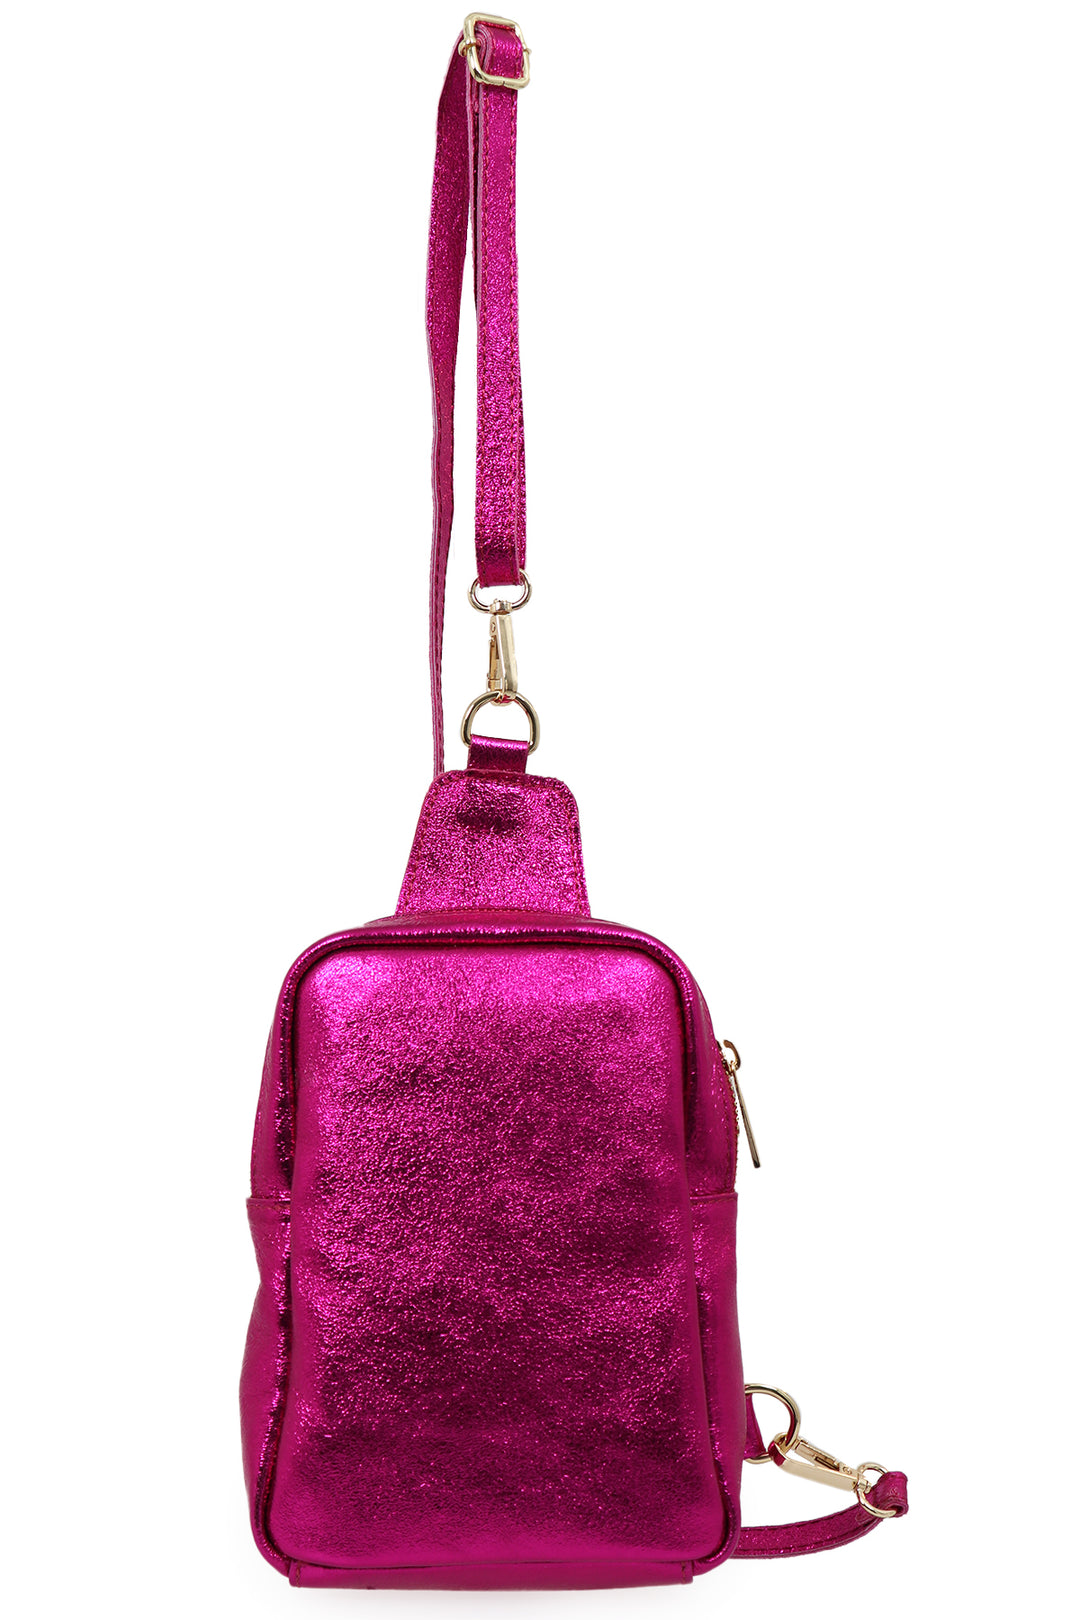 Metallic Raspberry Genuine Italian Leather Sling Bag